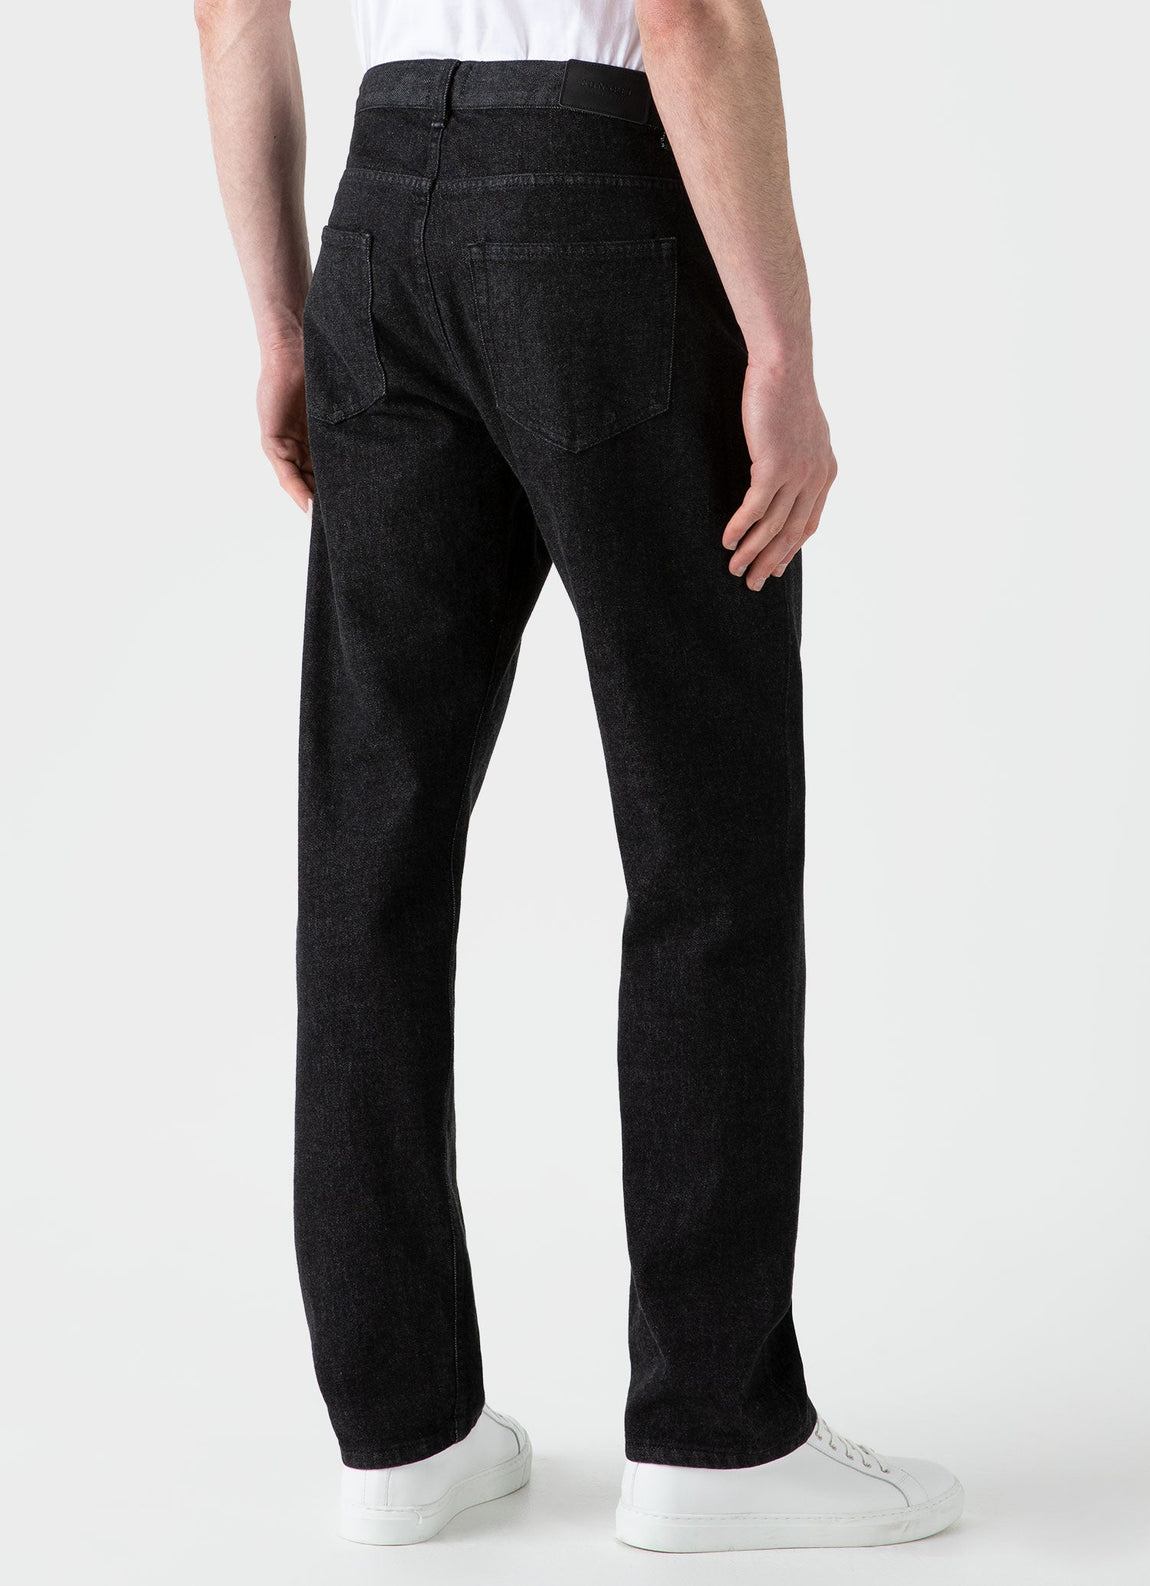 Men's Regular Fit Jean in Black Denim Wash